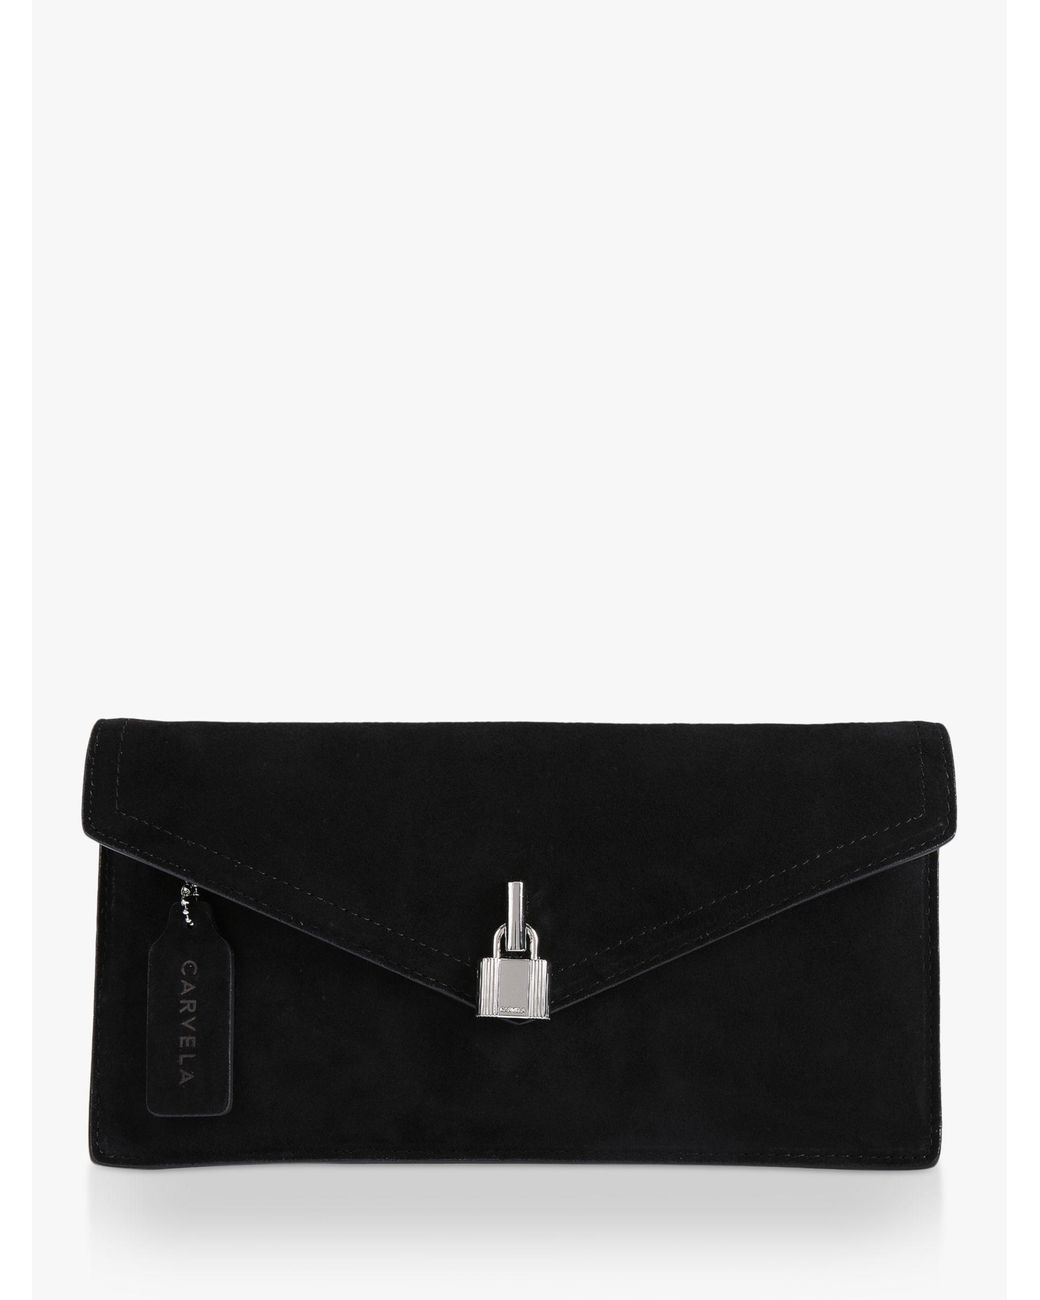 Carvela Kurt Geiger Vanity Clutch Bag in Black | Lyst UK